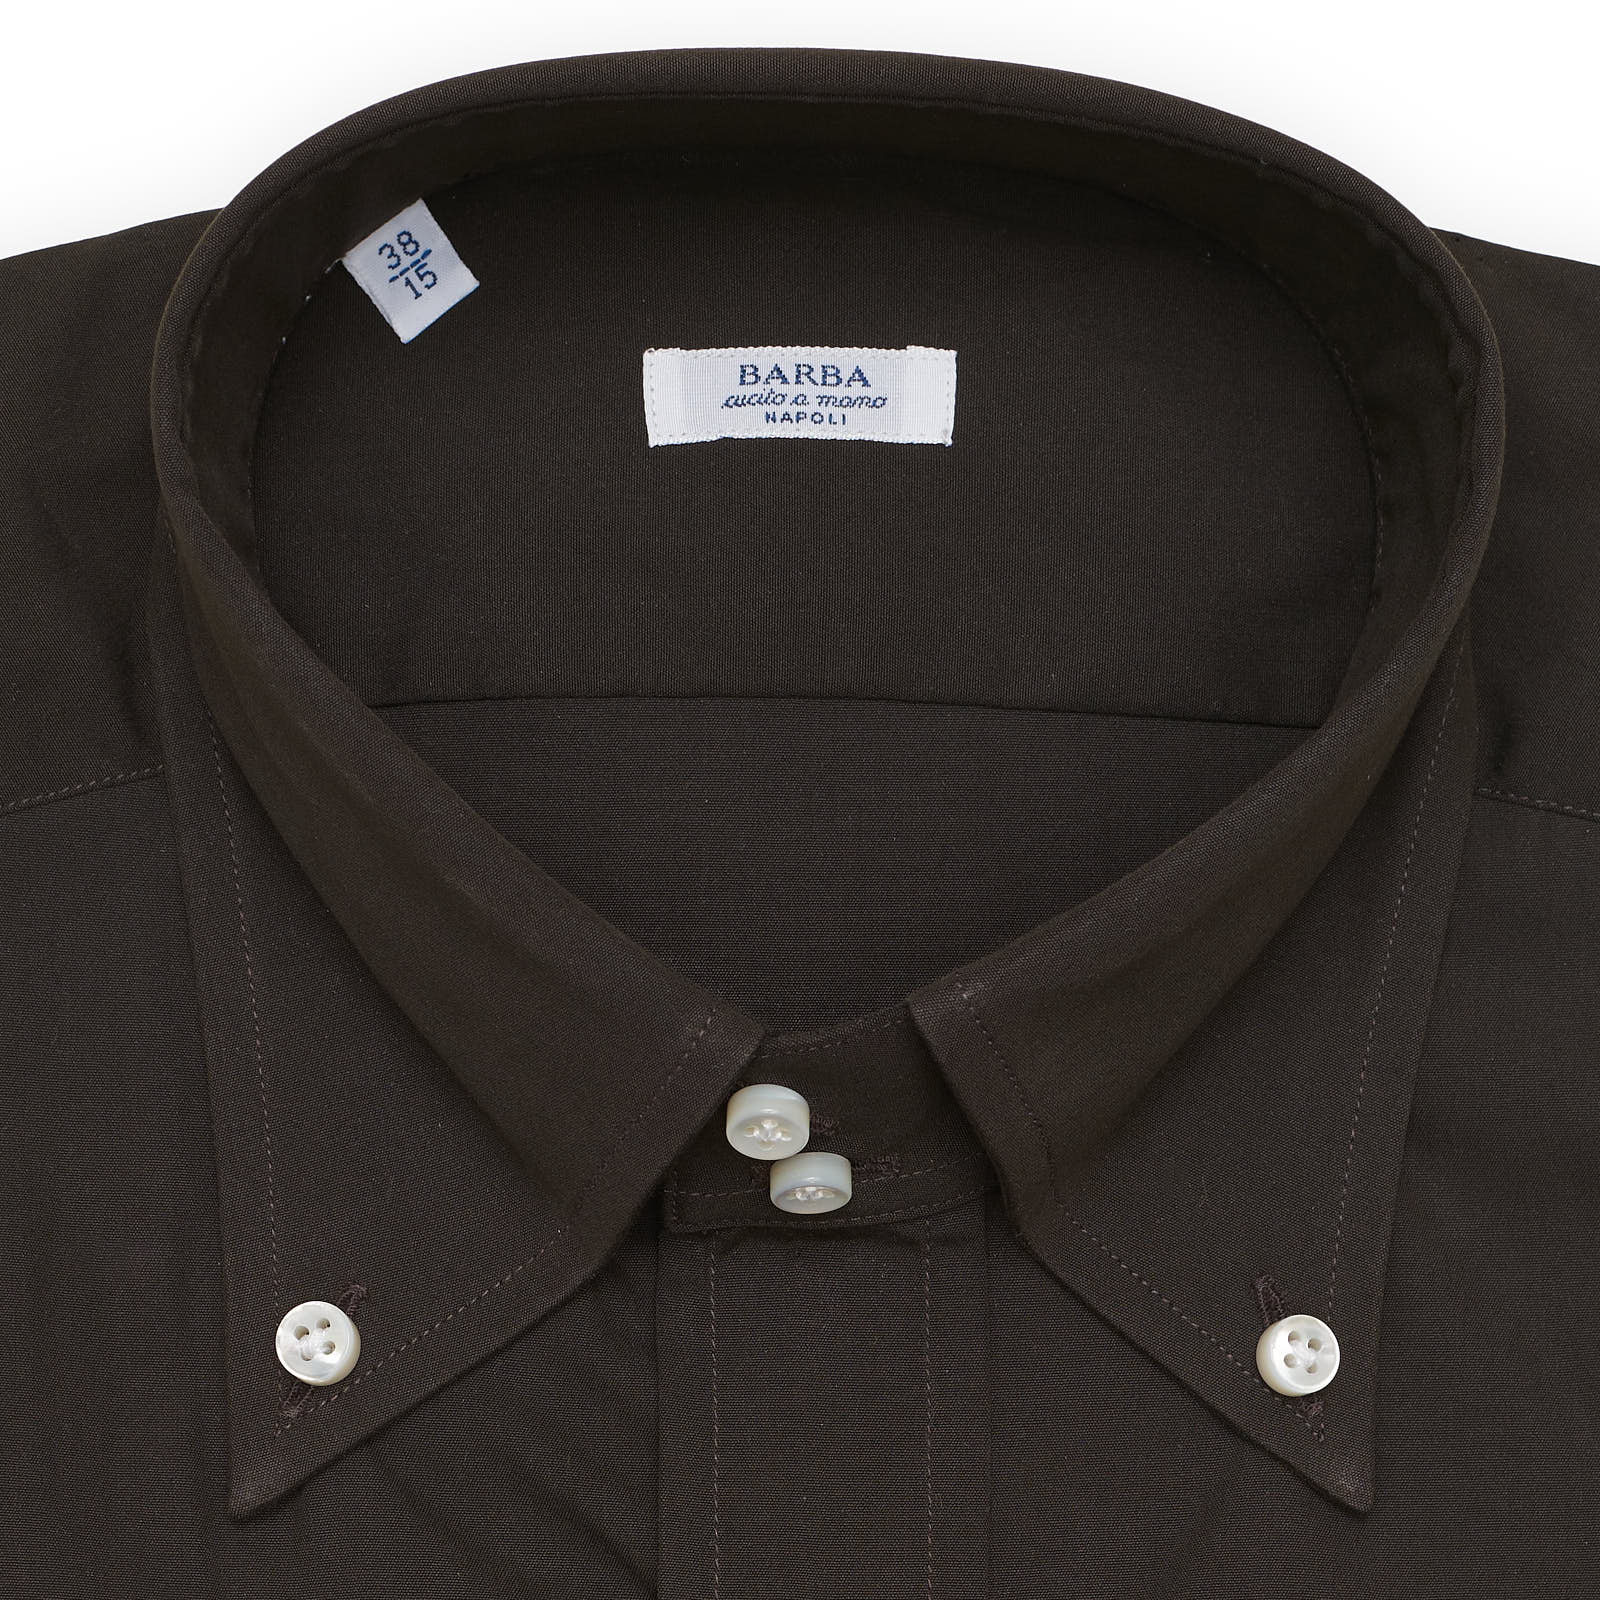 BARBA Napoli Brown Cotton-Polyamide-Elastane Botton-Down Dress Shirt EU 38 NEW US 15